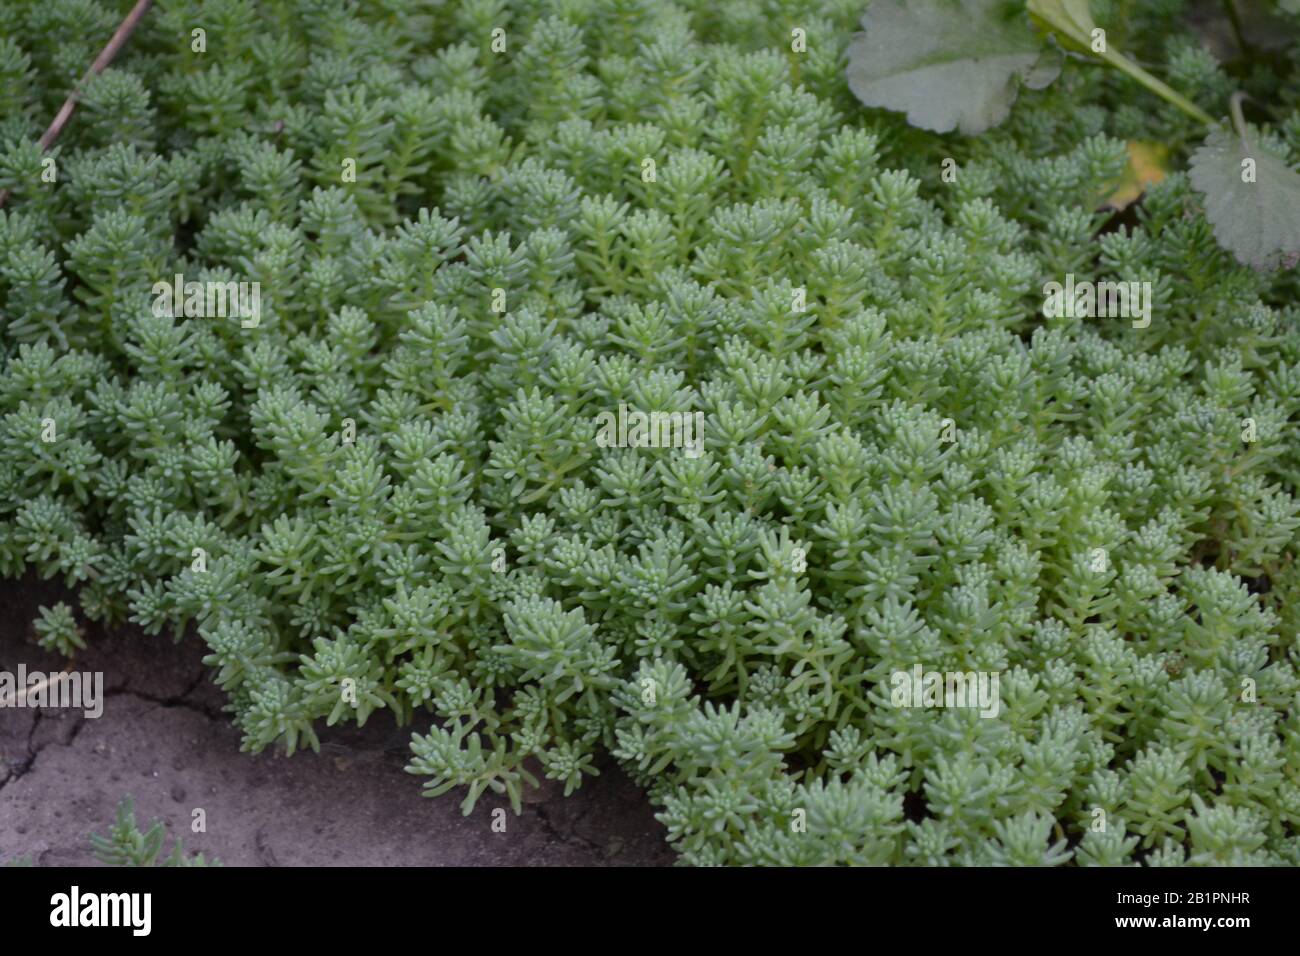 Stonecrop. Hare cabbage. Sedum. Green moss. Decorative grassy carpet. Green flower bed decoration. Garden. Horizontal photo Stock Photo